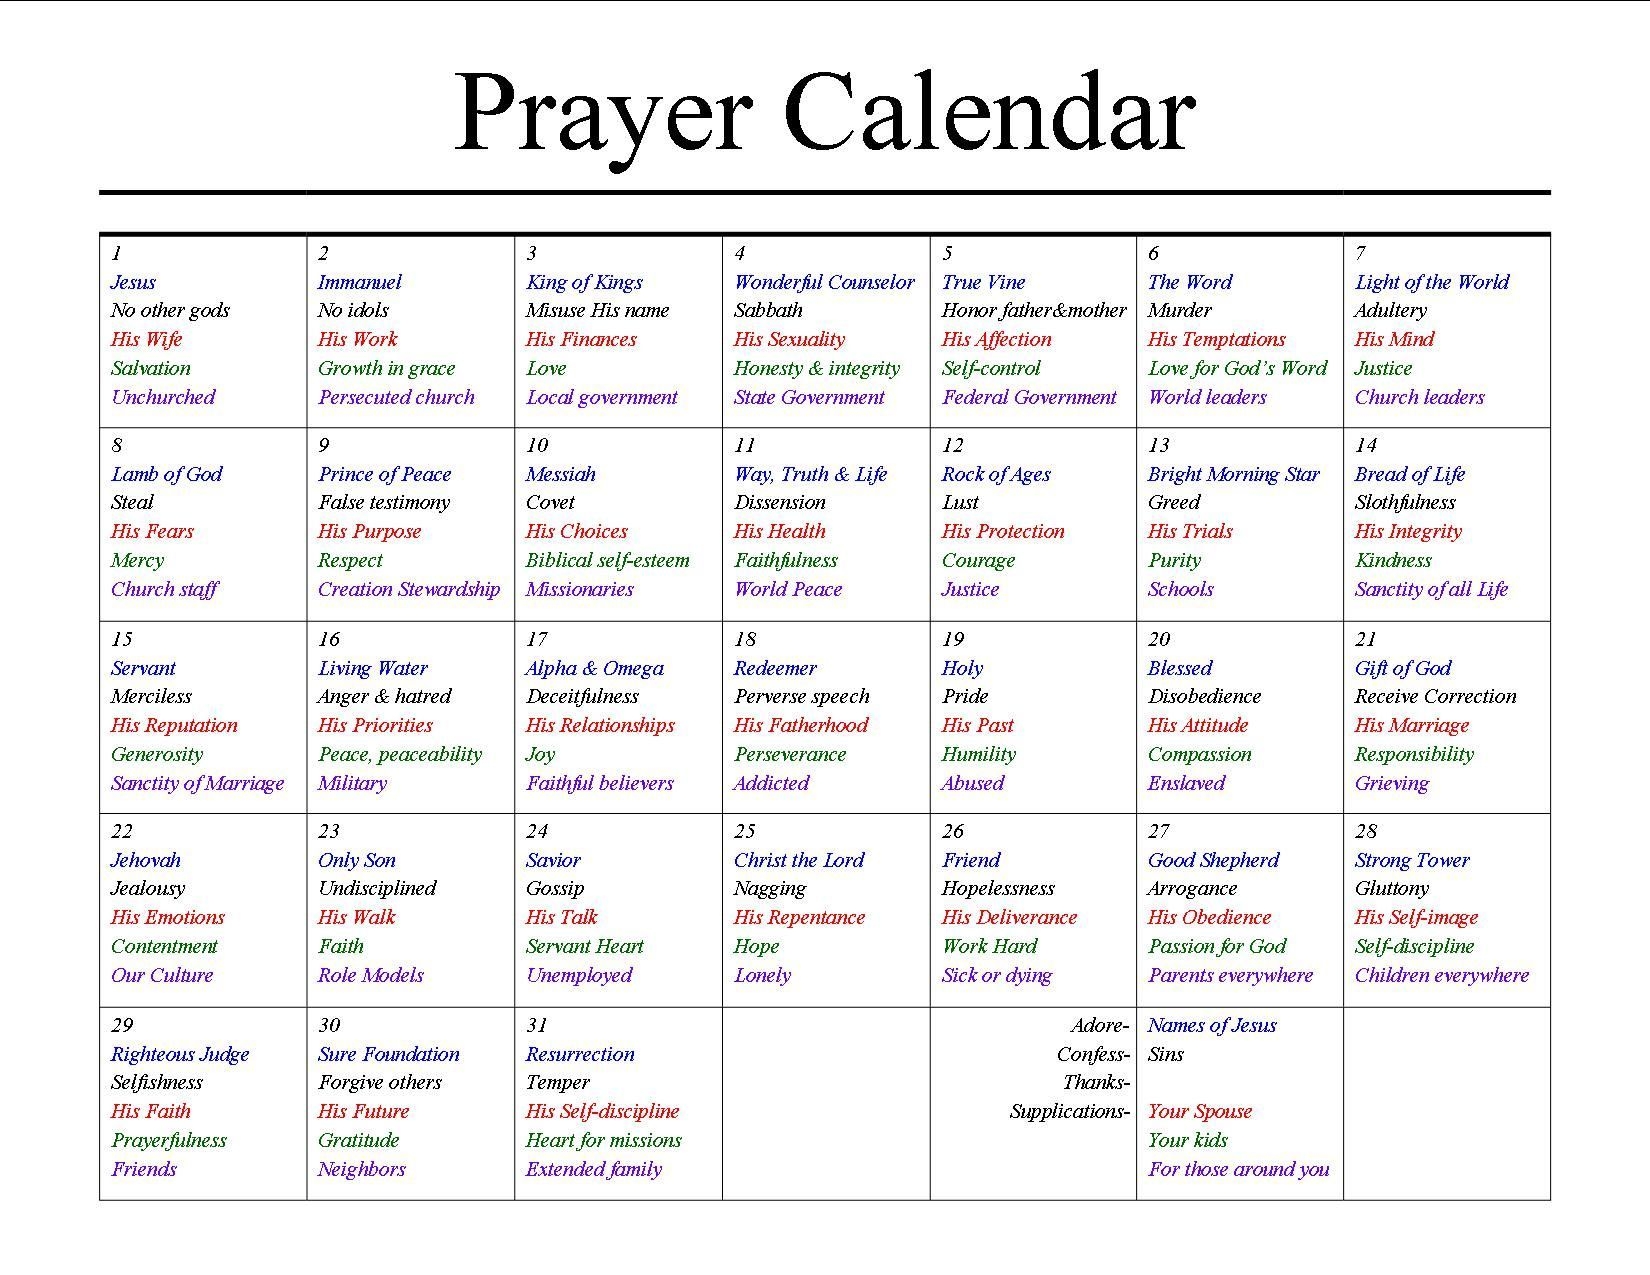 A Prayer Calendar (With Images) | Prayer List, Prayers